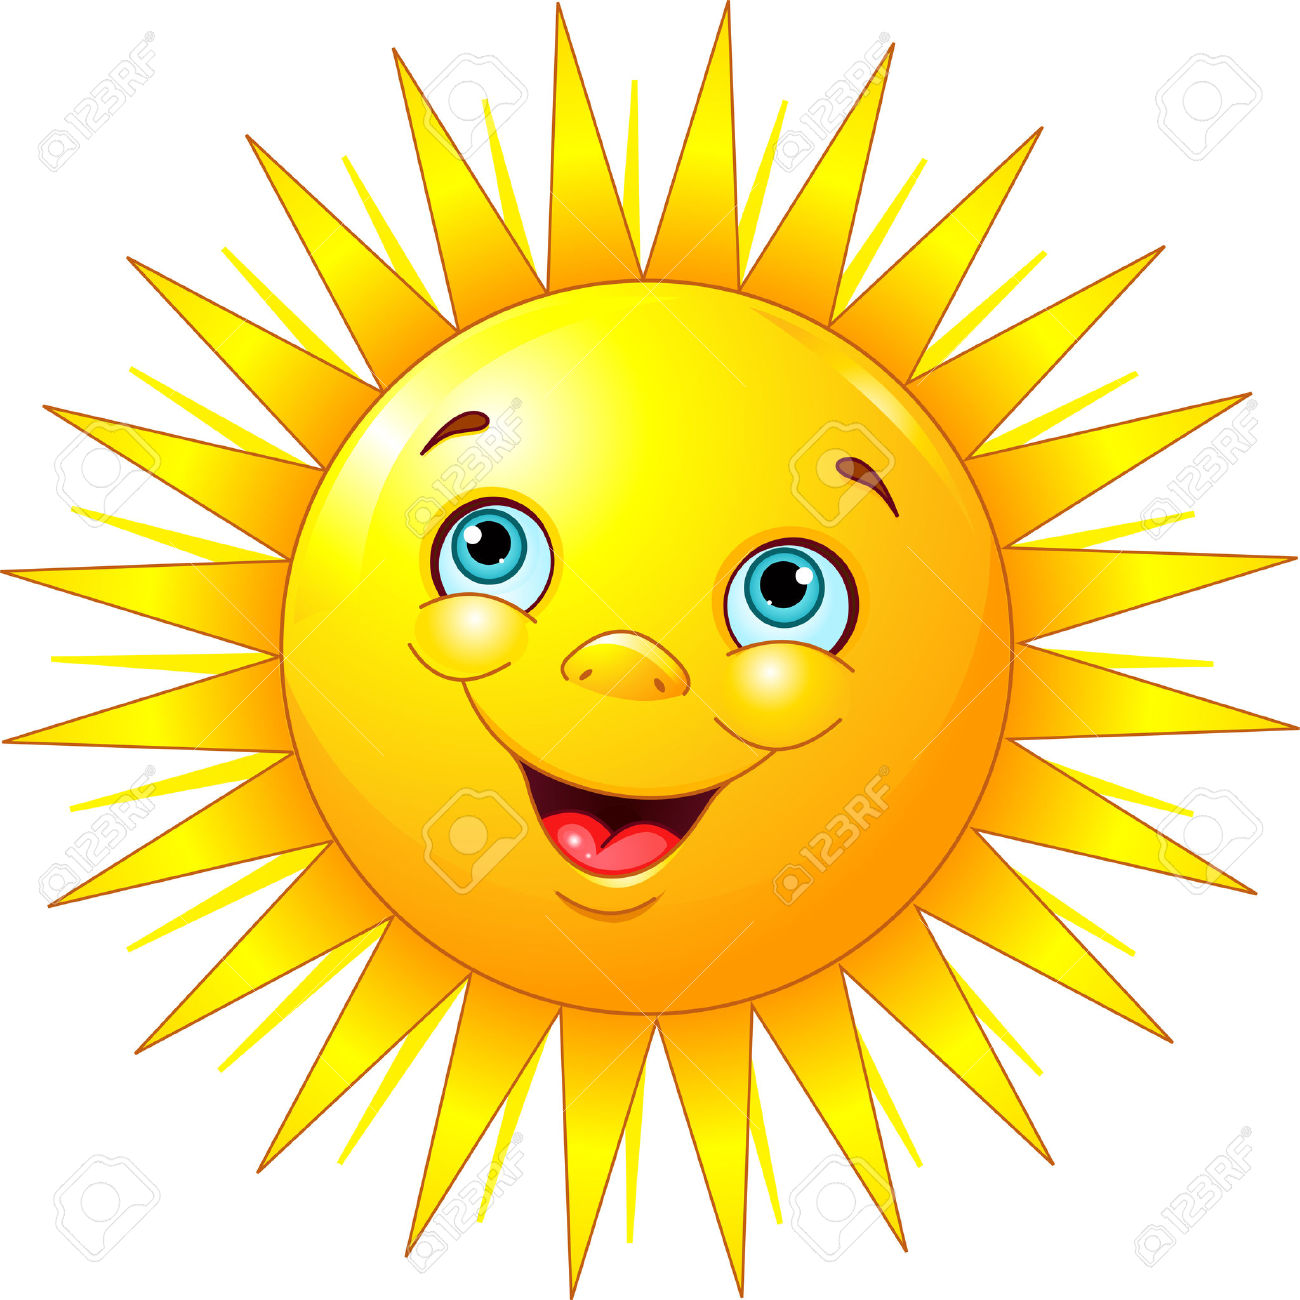 clipart sunshine: Illustration of smiling sun character Illustration